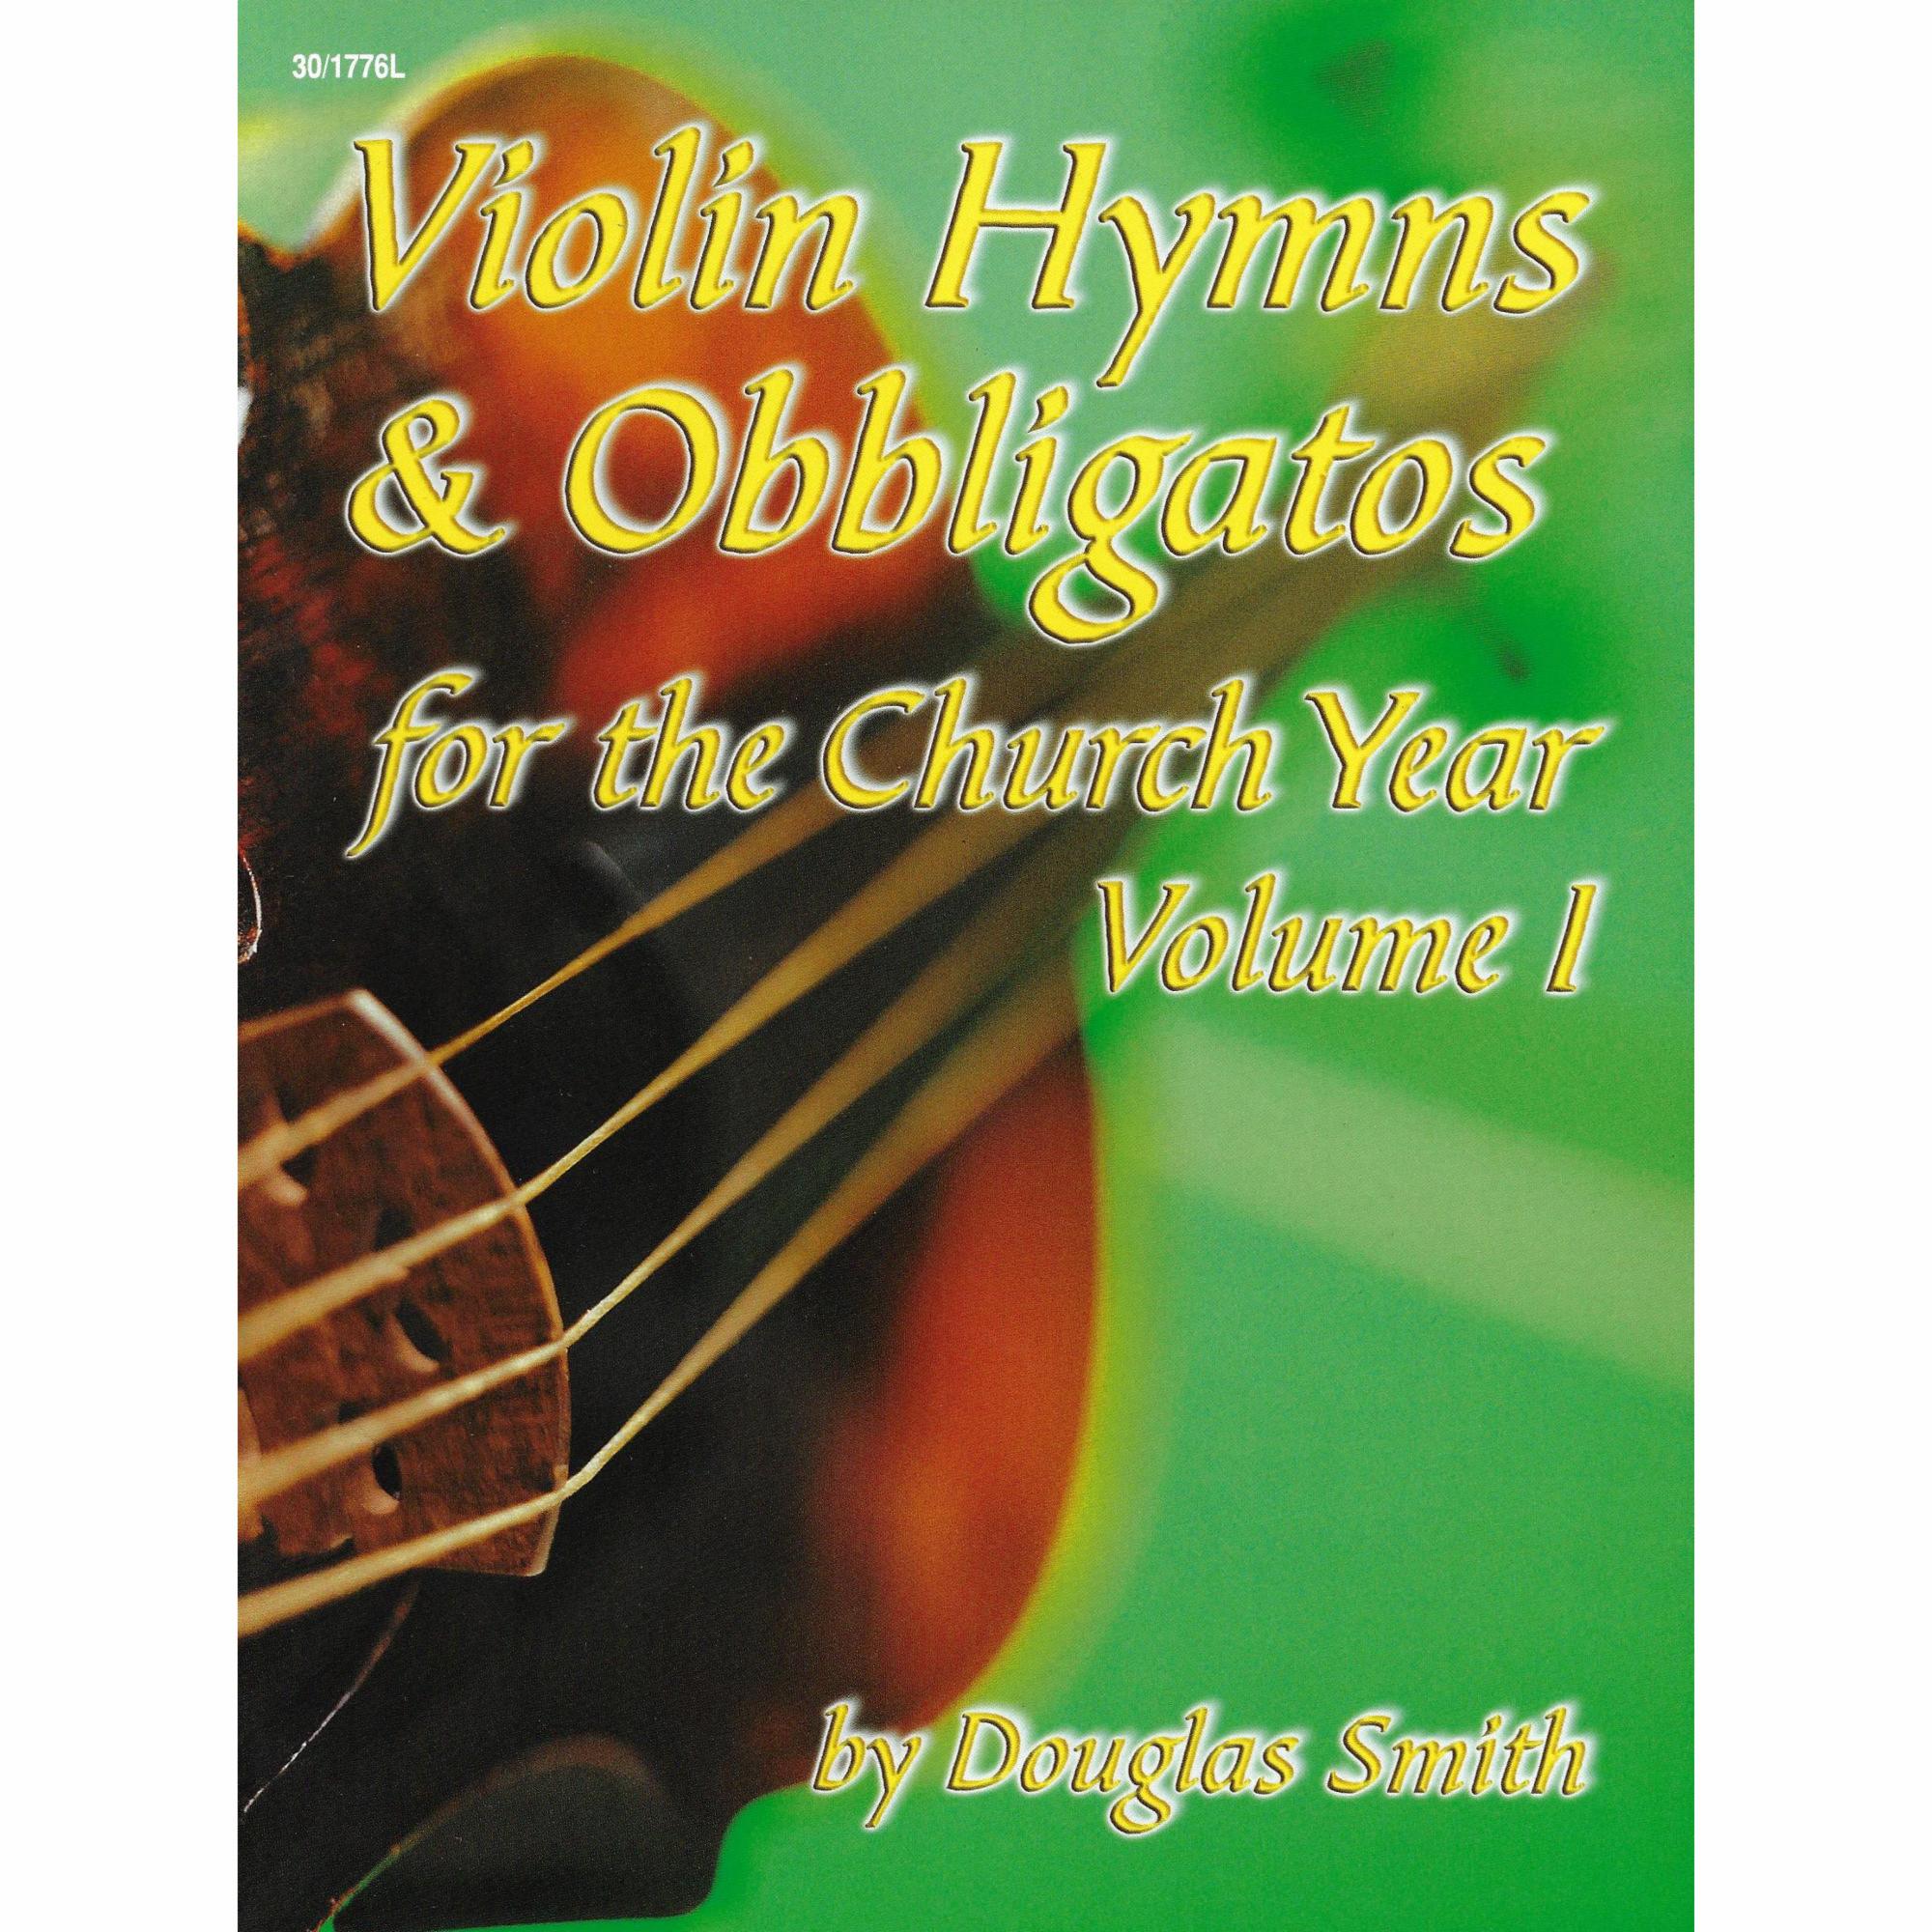 Violin Hymns & Obbligatos, Vols. I-III for Two Violins